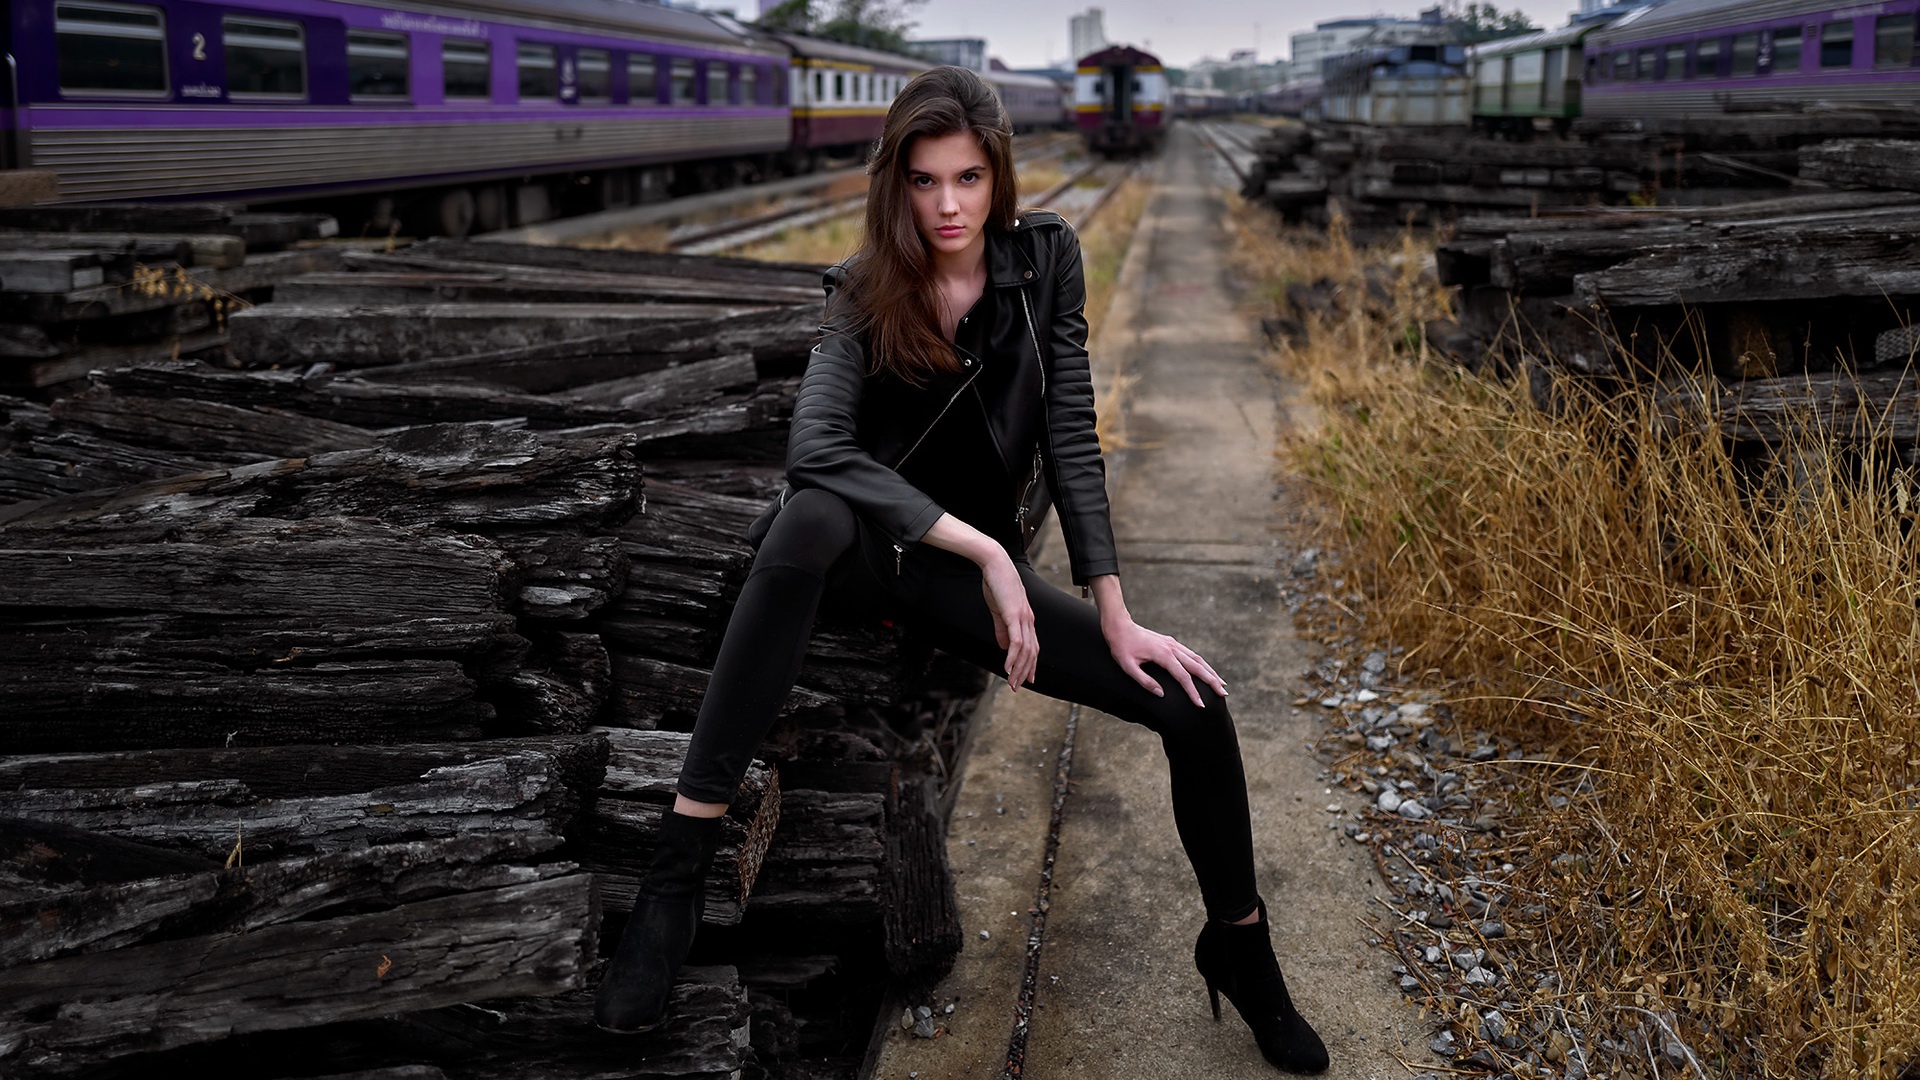 Women Model Women Outdoors Train Vehicle Heels Brunette Black Clothing Leather Jacket Black Pants Ha 1920x1080